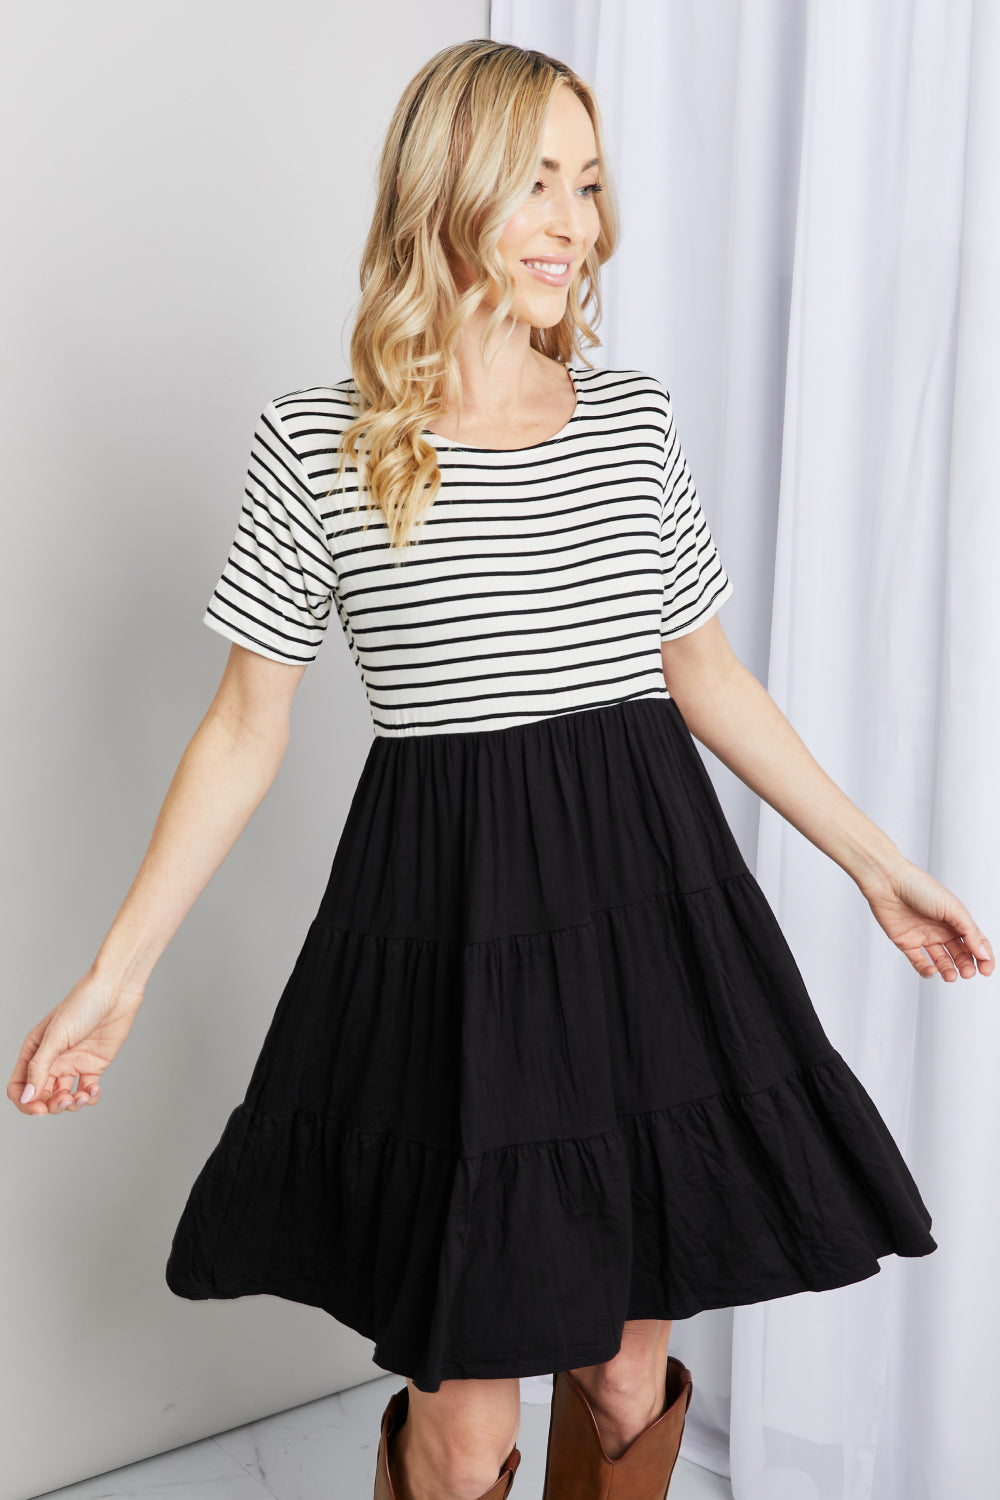 Call Me Cute Two-Tone Black & White Short Sleeve Spliced Dress